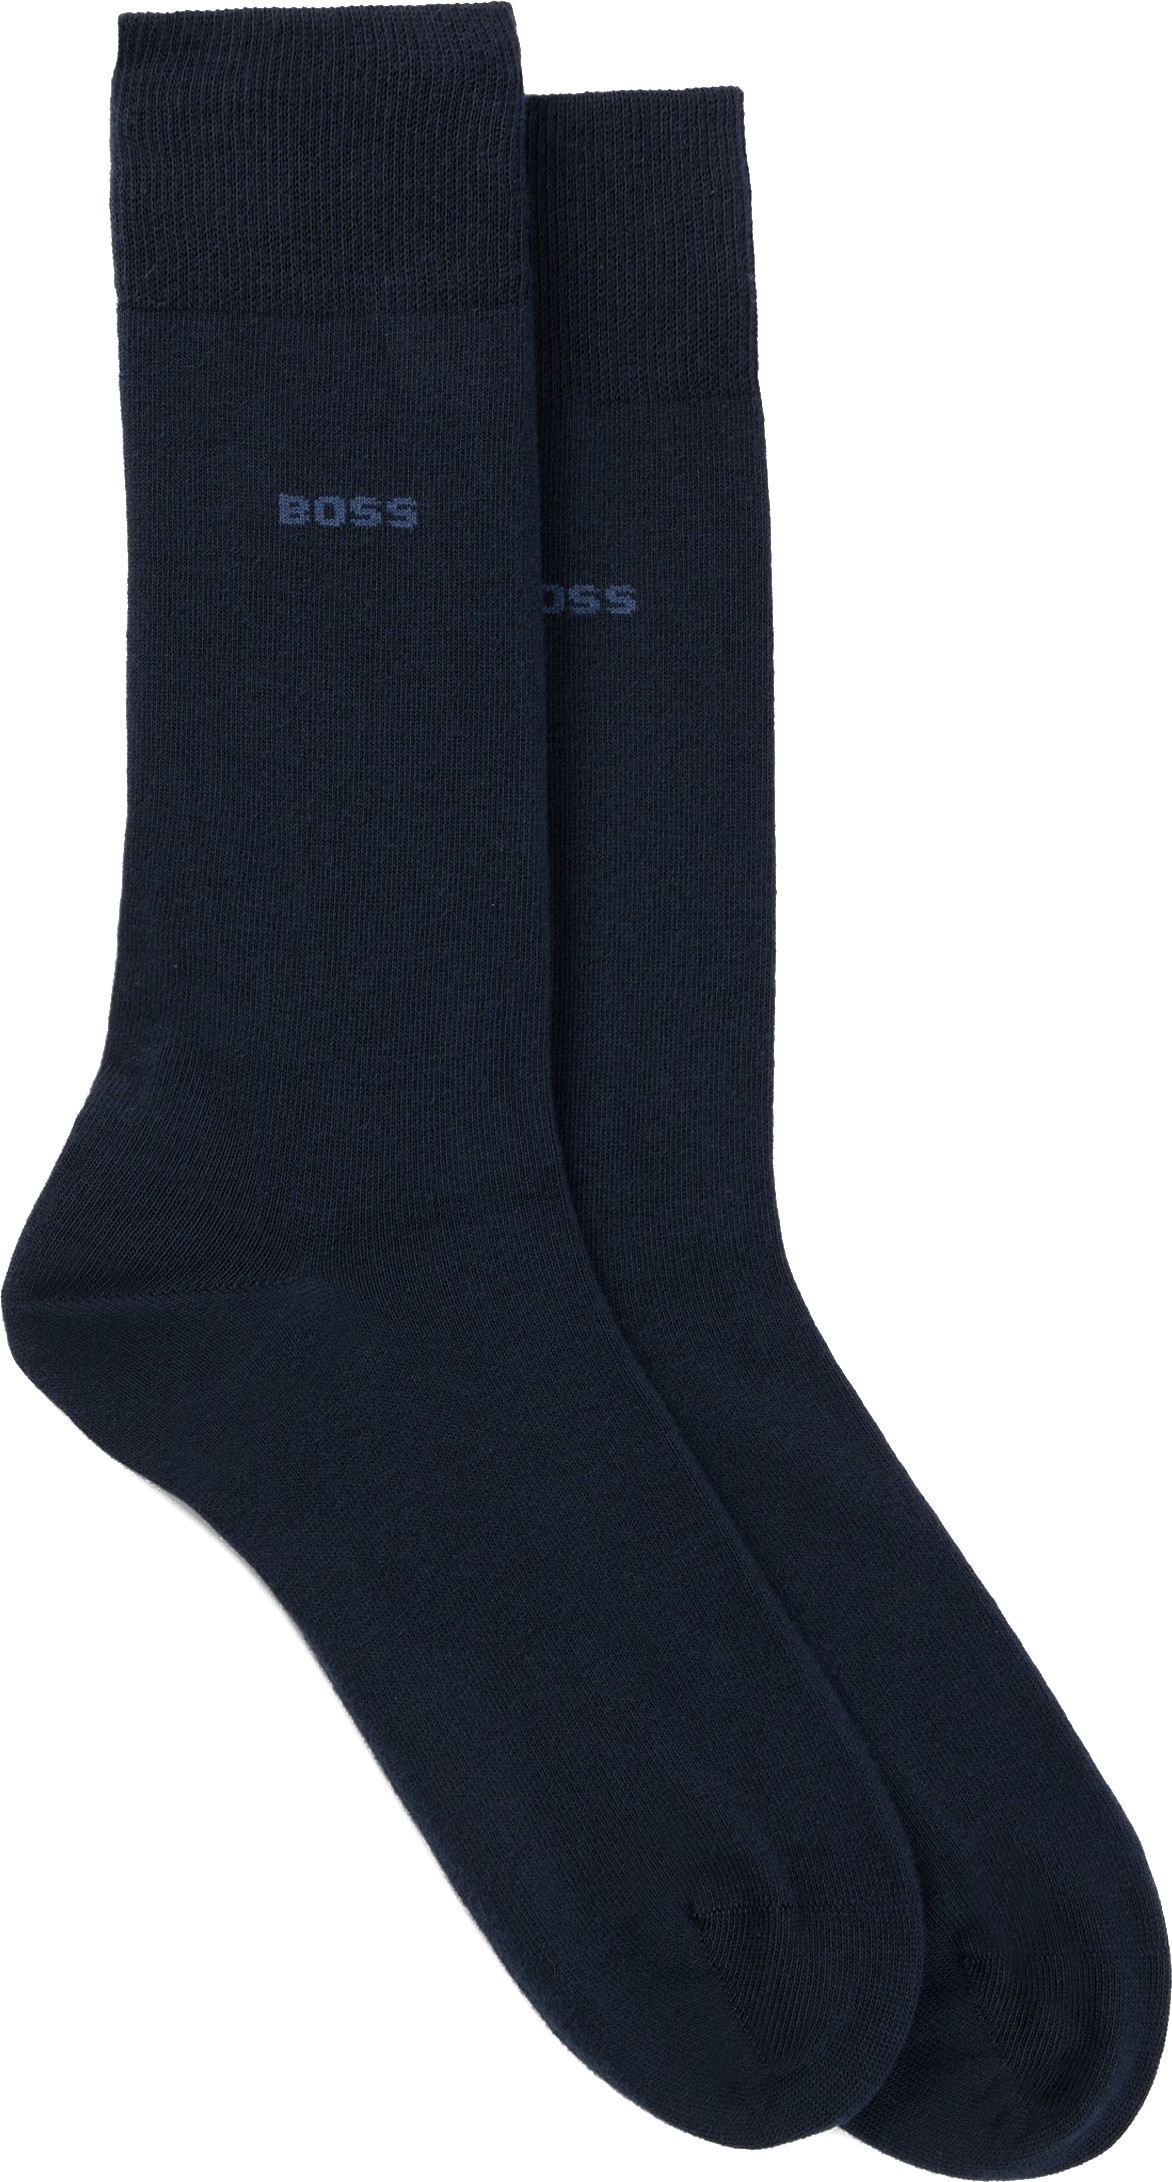 Hugo Boss 2 PACK - pánske ponožky BOSS 50516616-401 39-42